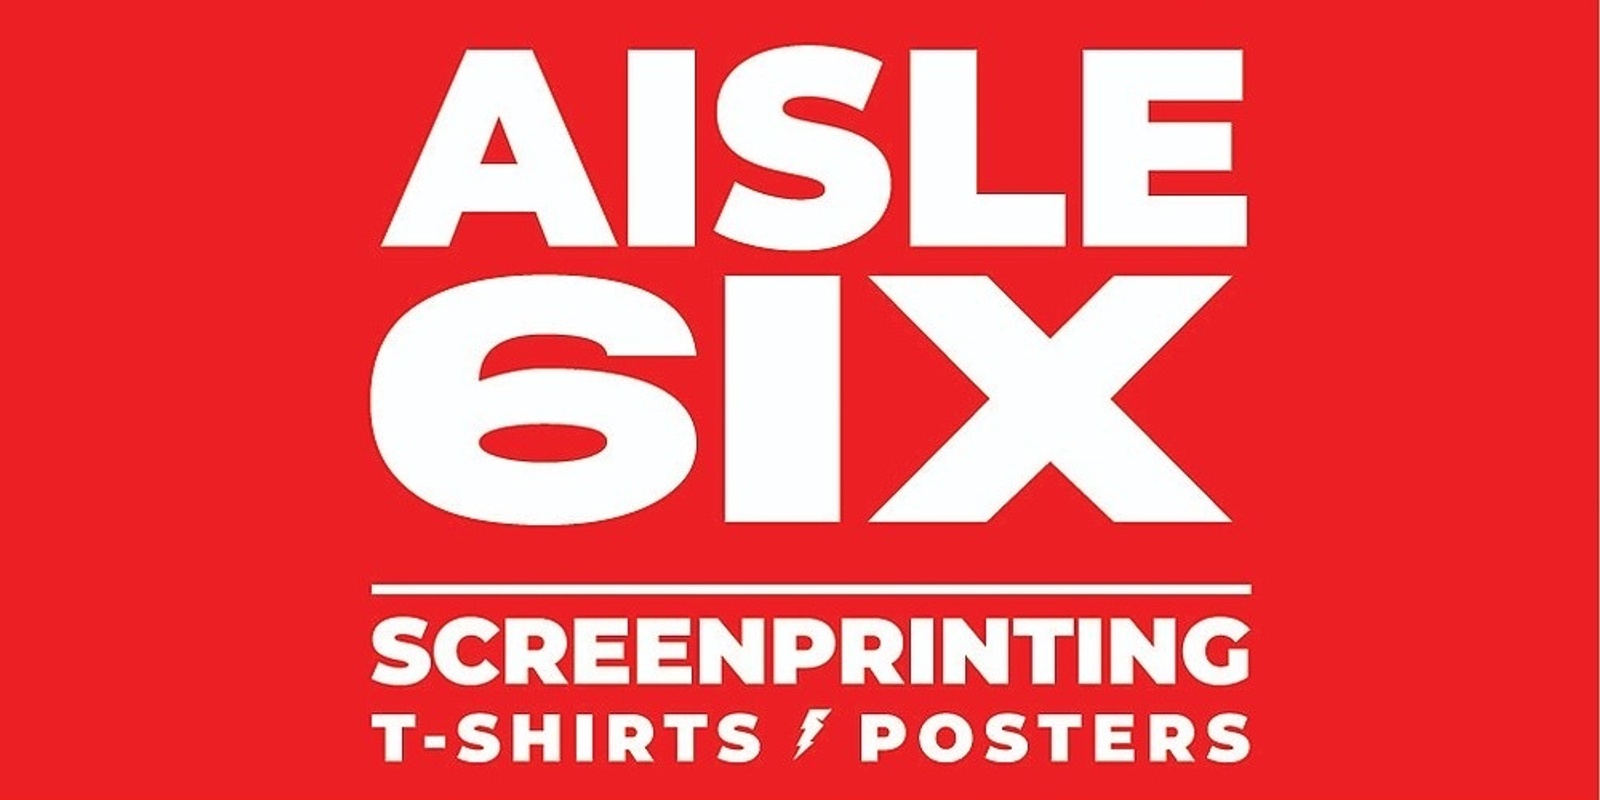 Aisle6ix Screenprinting Studio's banner